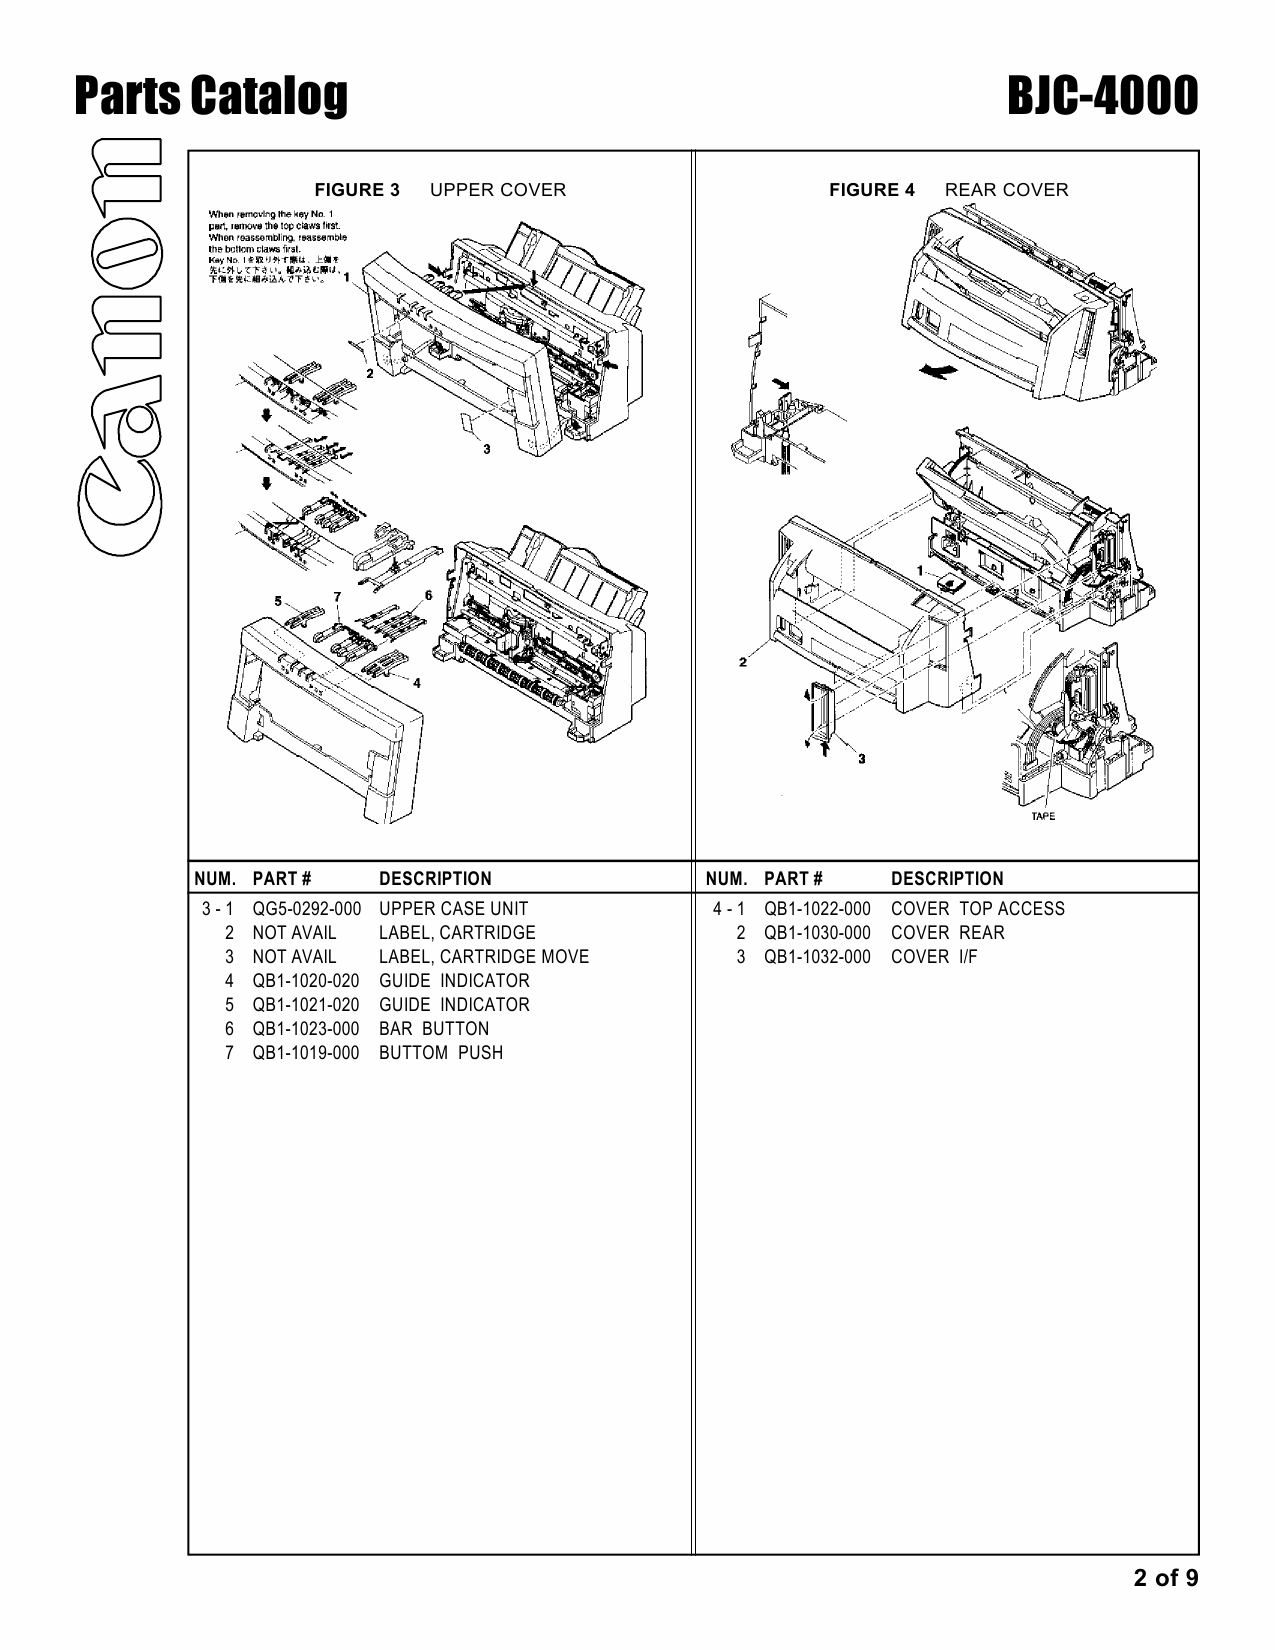 Canon BubbleJet BJC-4000 Parts Catalog Manual-2